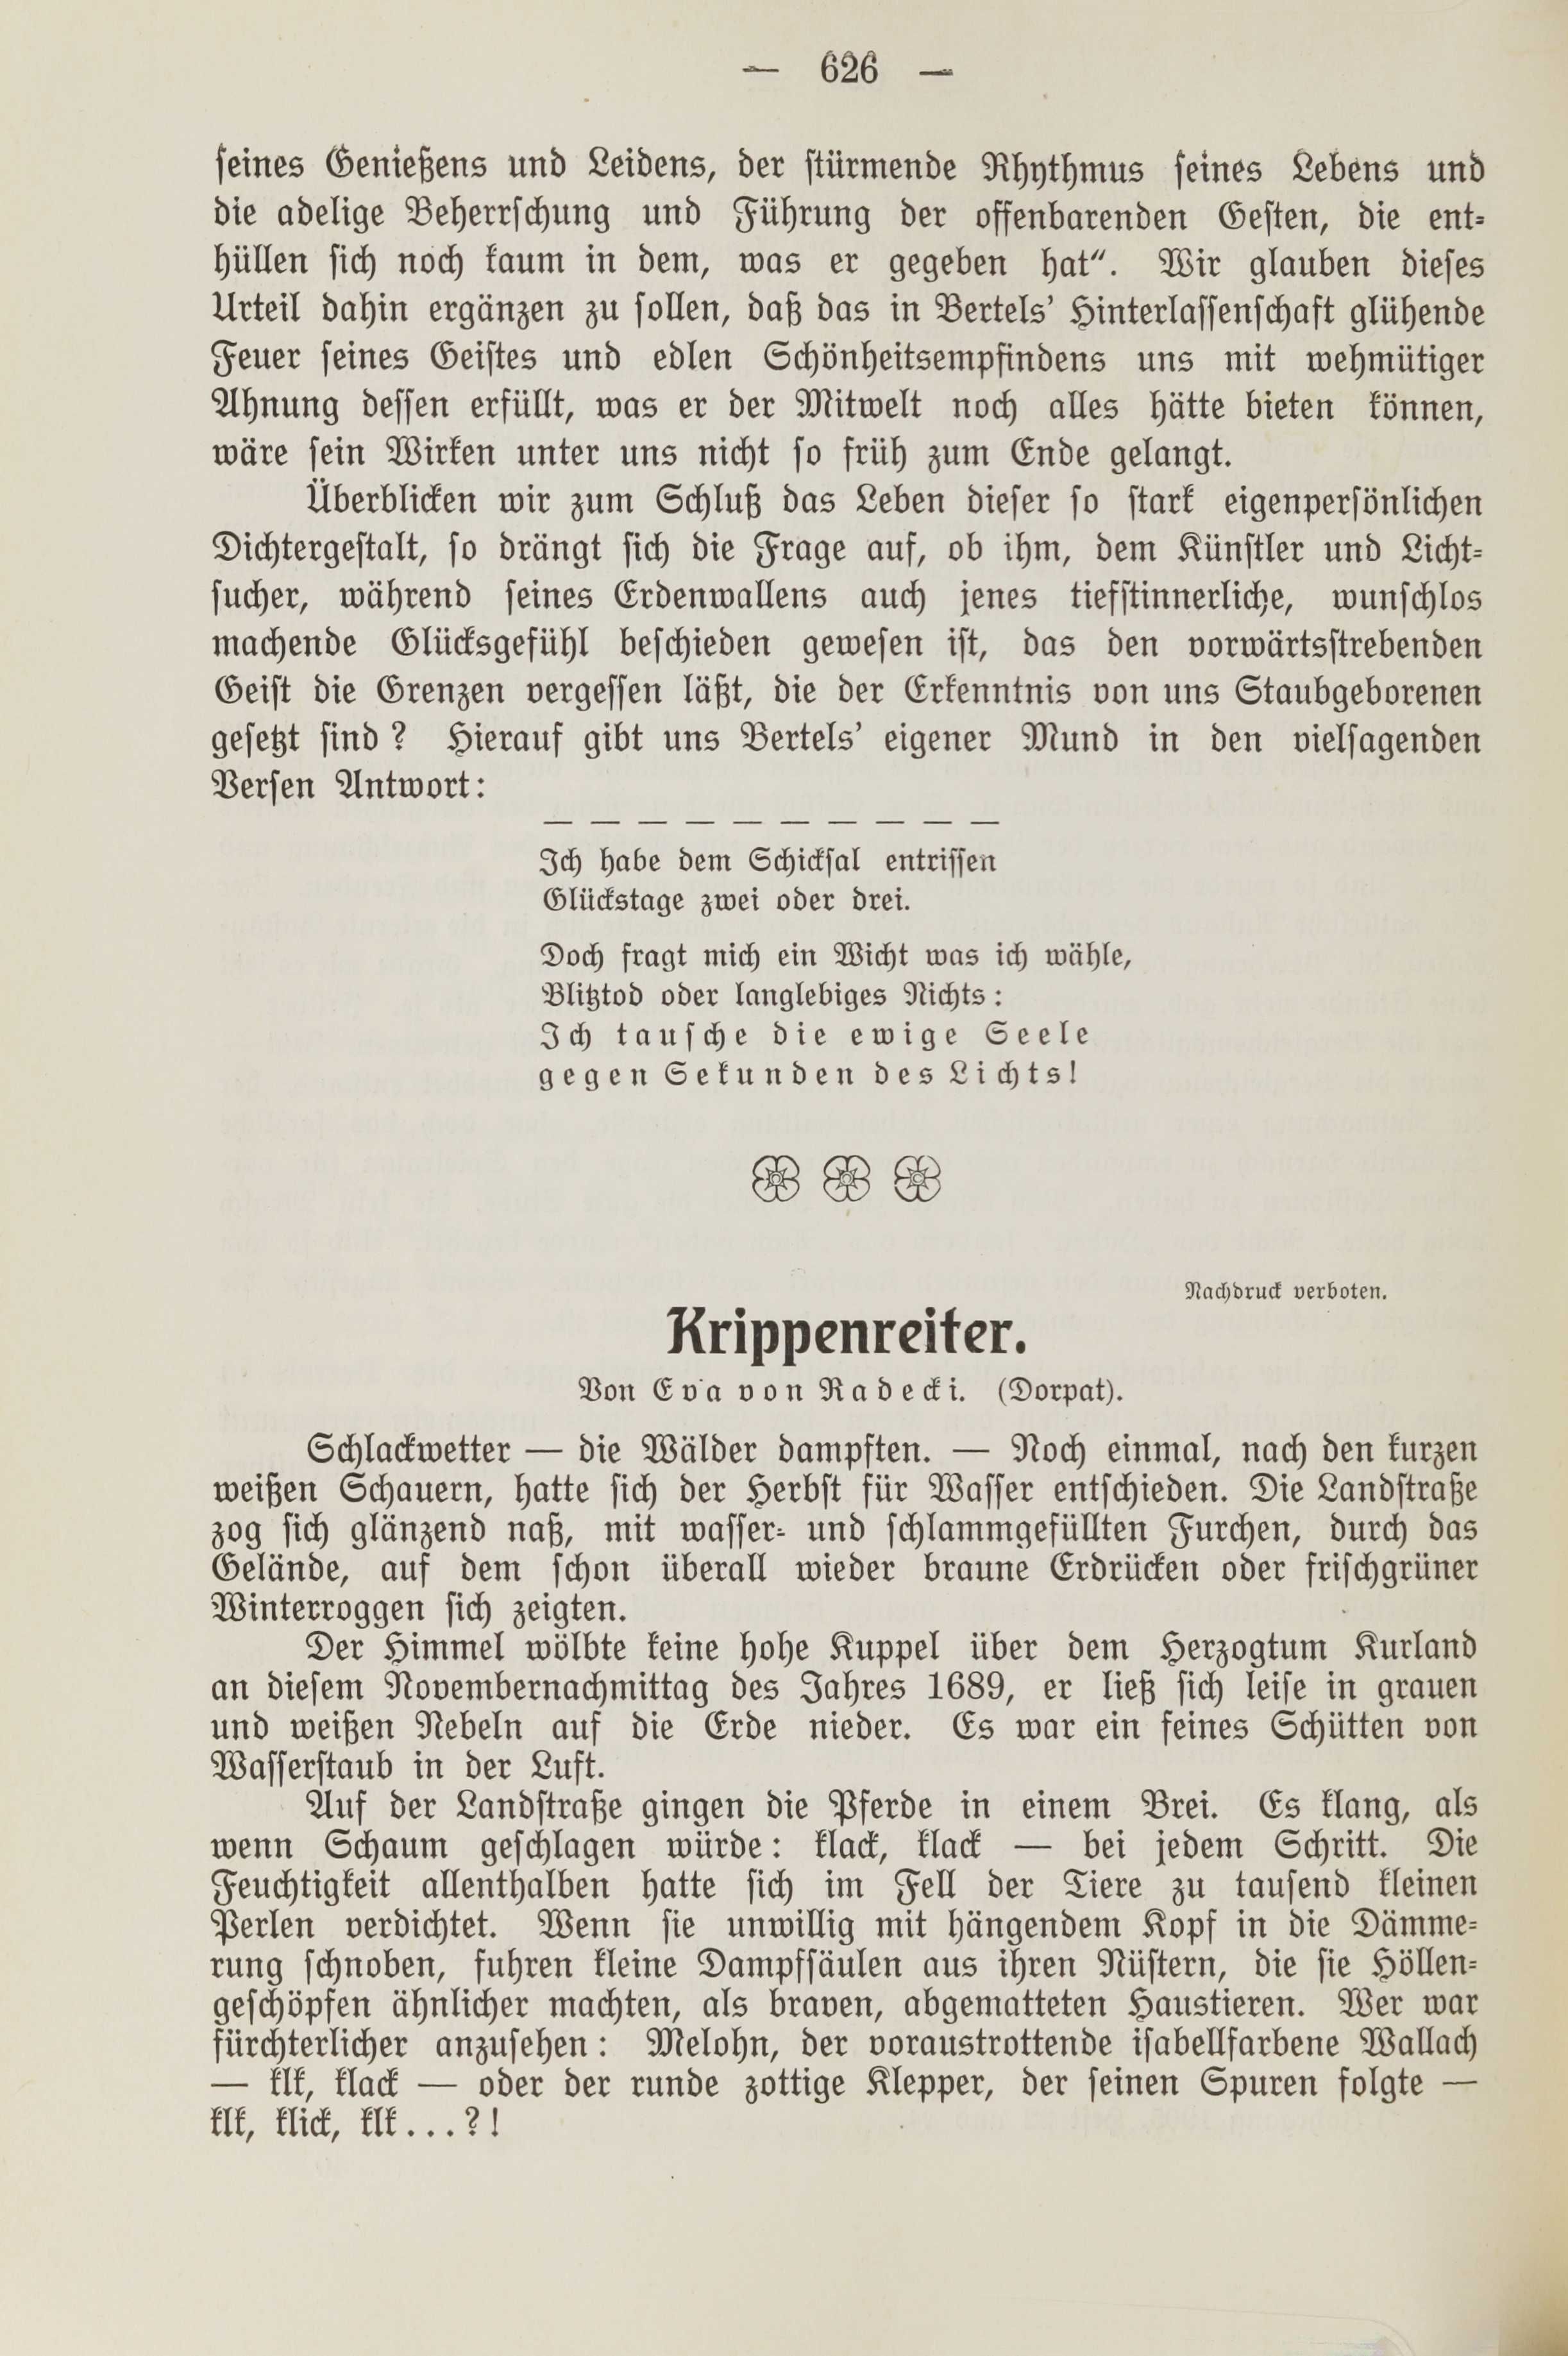 Krippenreiter (1913) | 1. (626) Main body of text